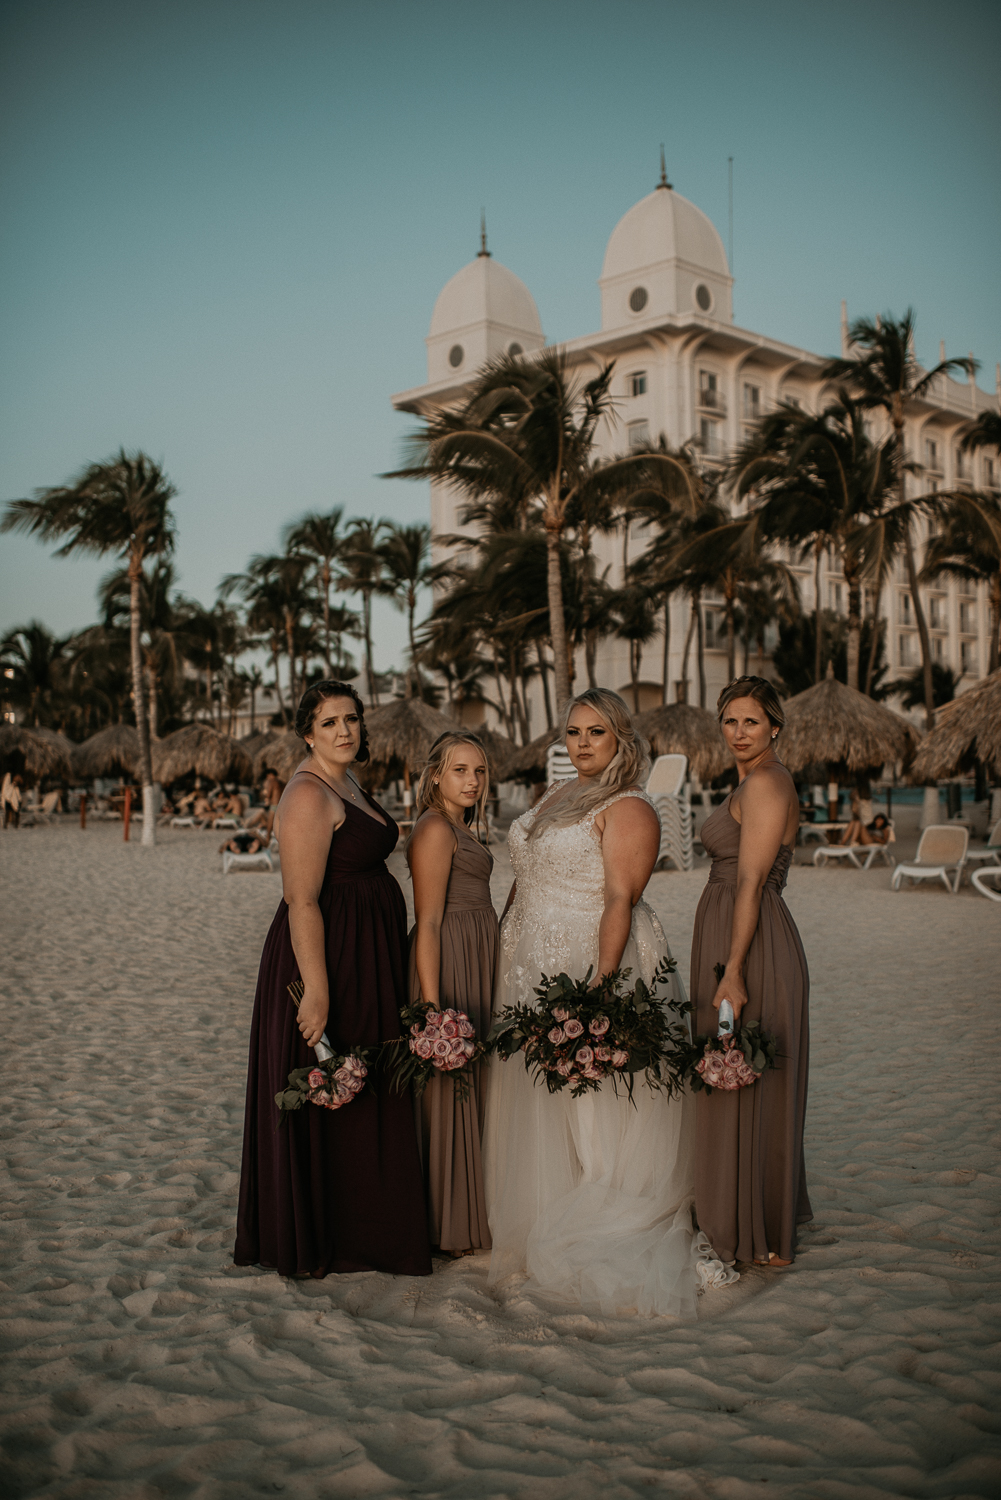 Bride and bridesmaids photos on the beach from a destination Aruba Elopement wedding at Riu Palace